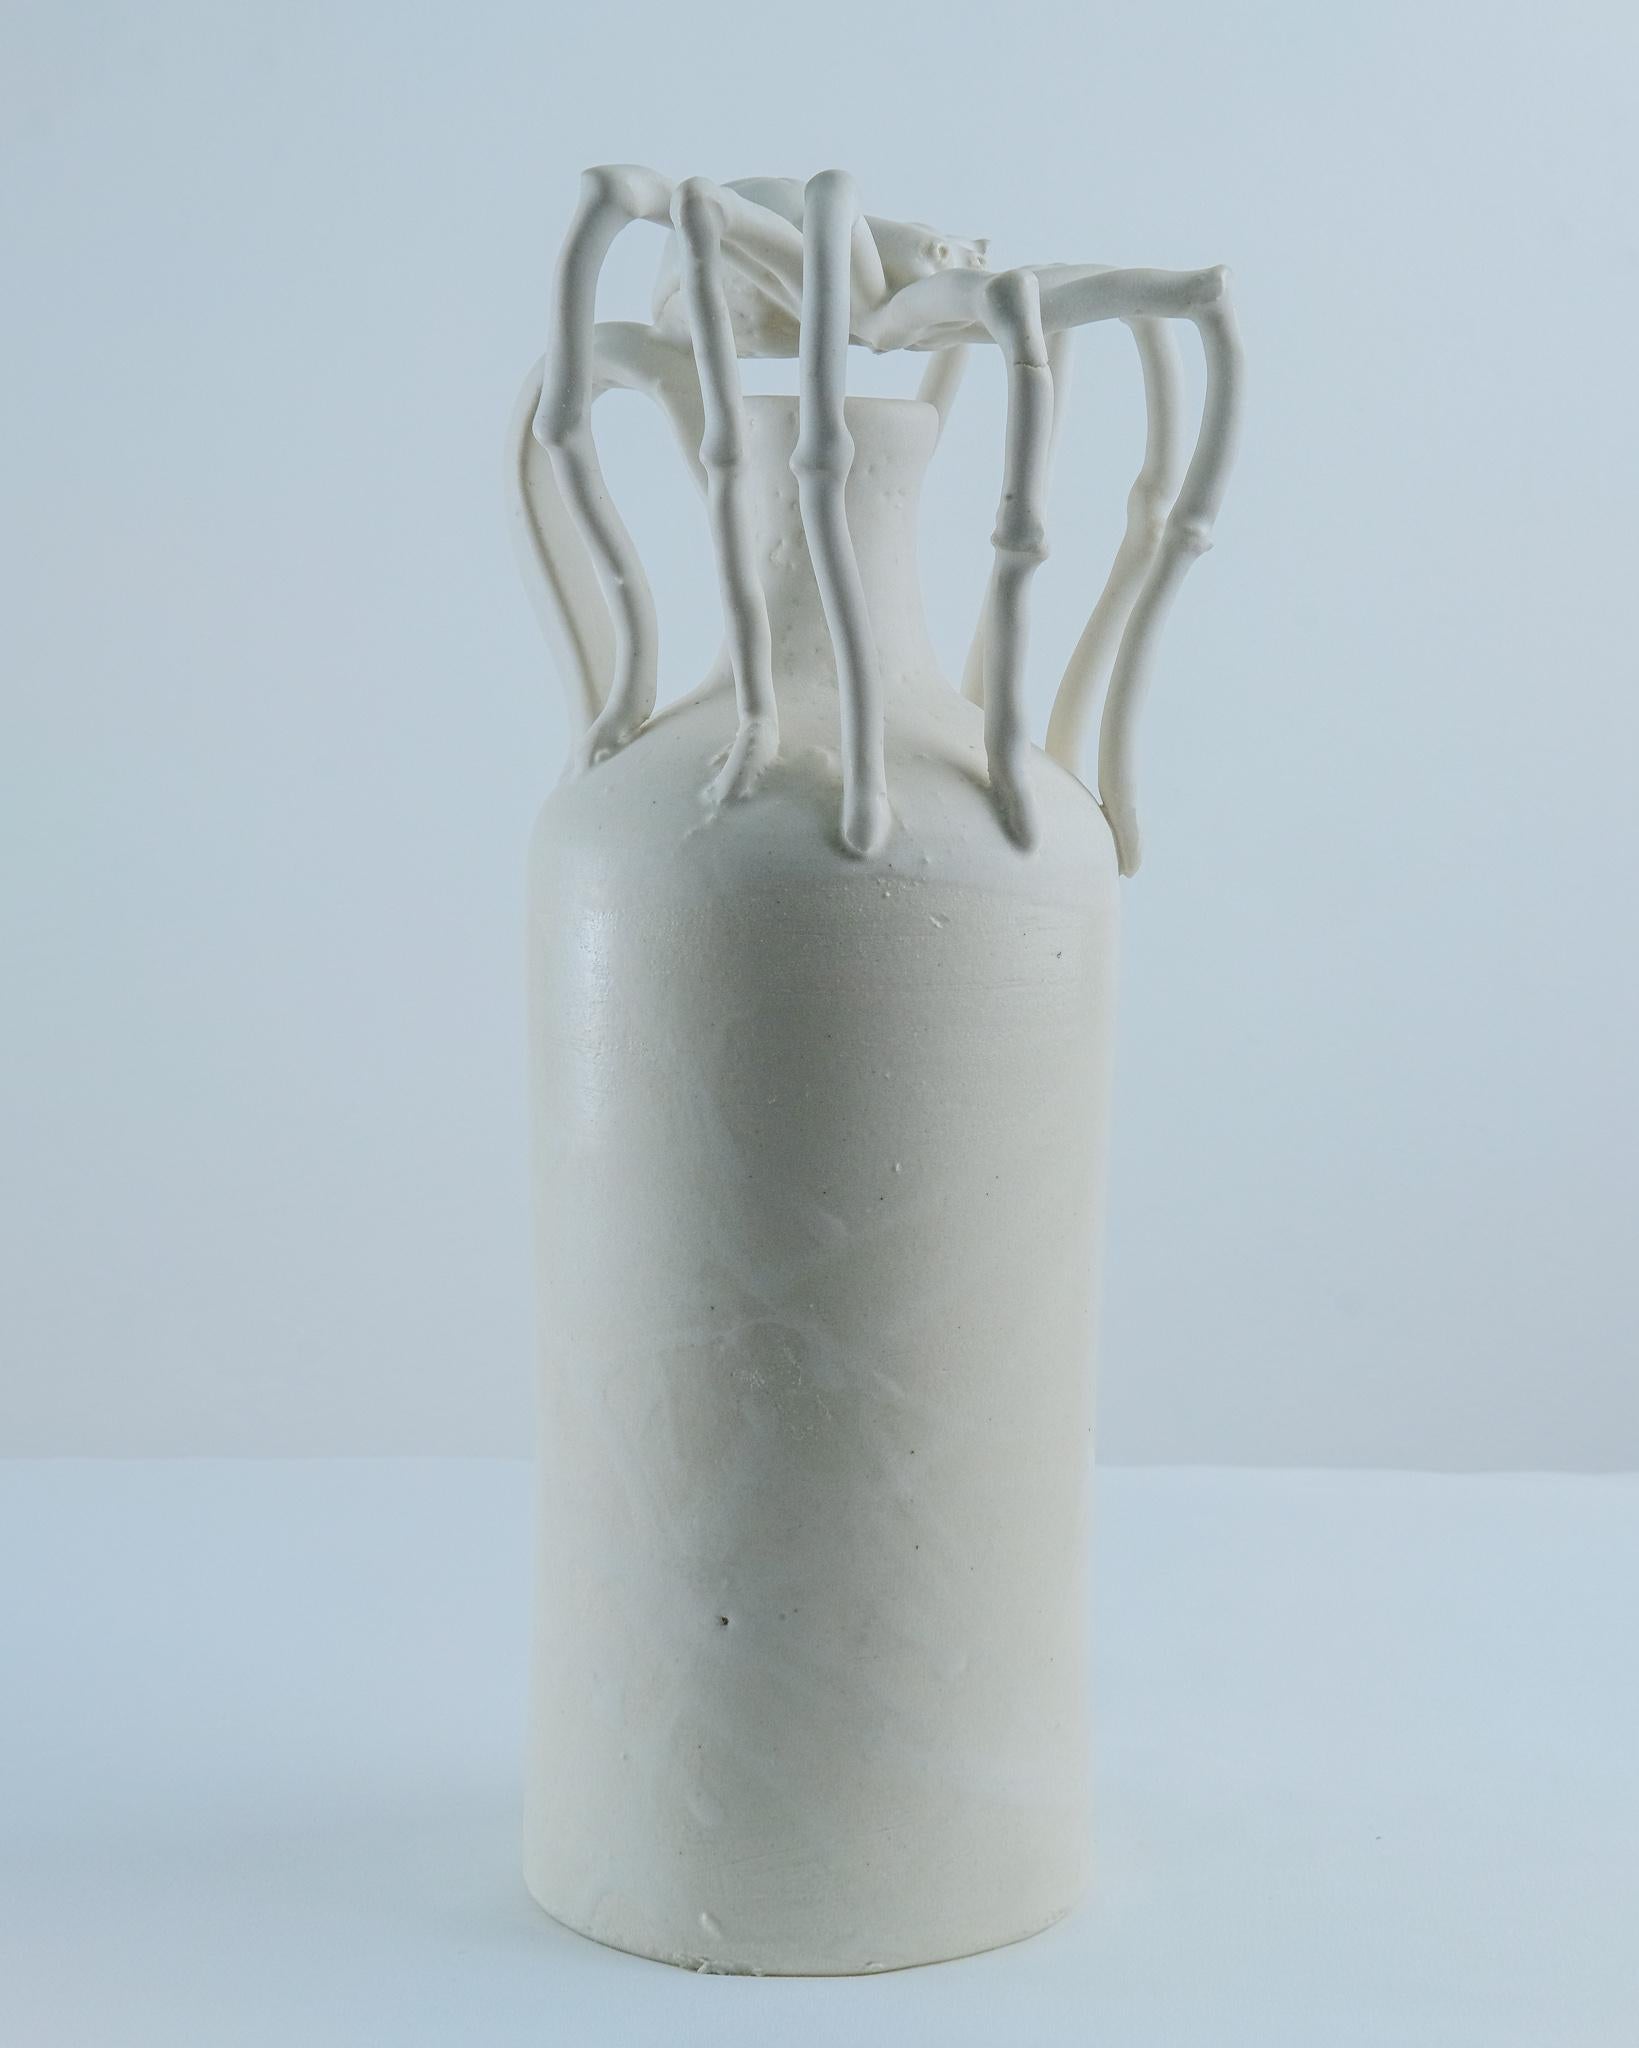 Spider vase - Sculpture by Claudio Jerónimo